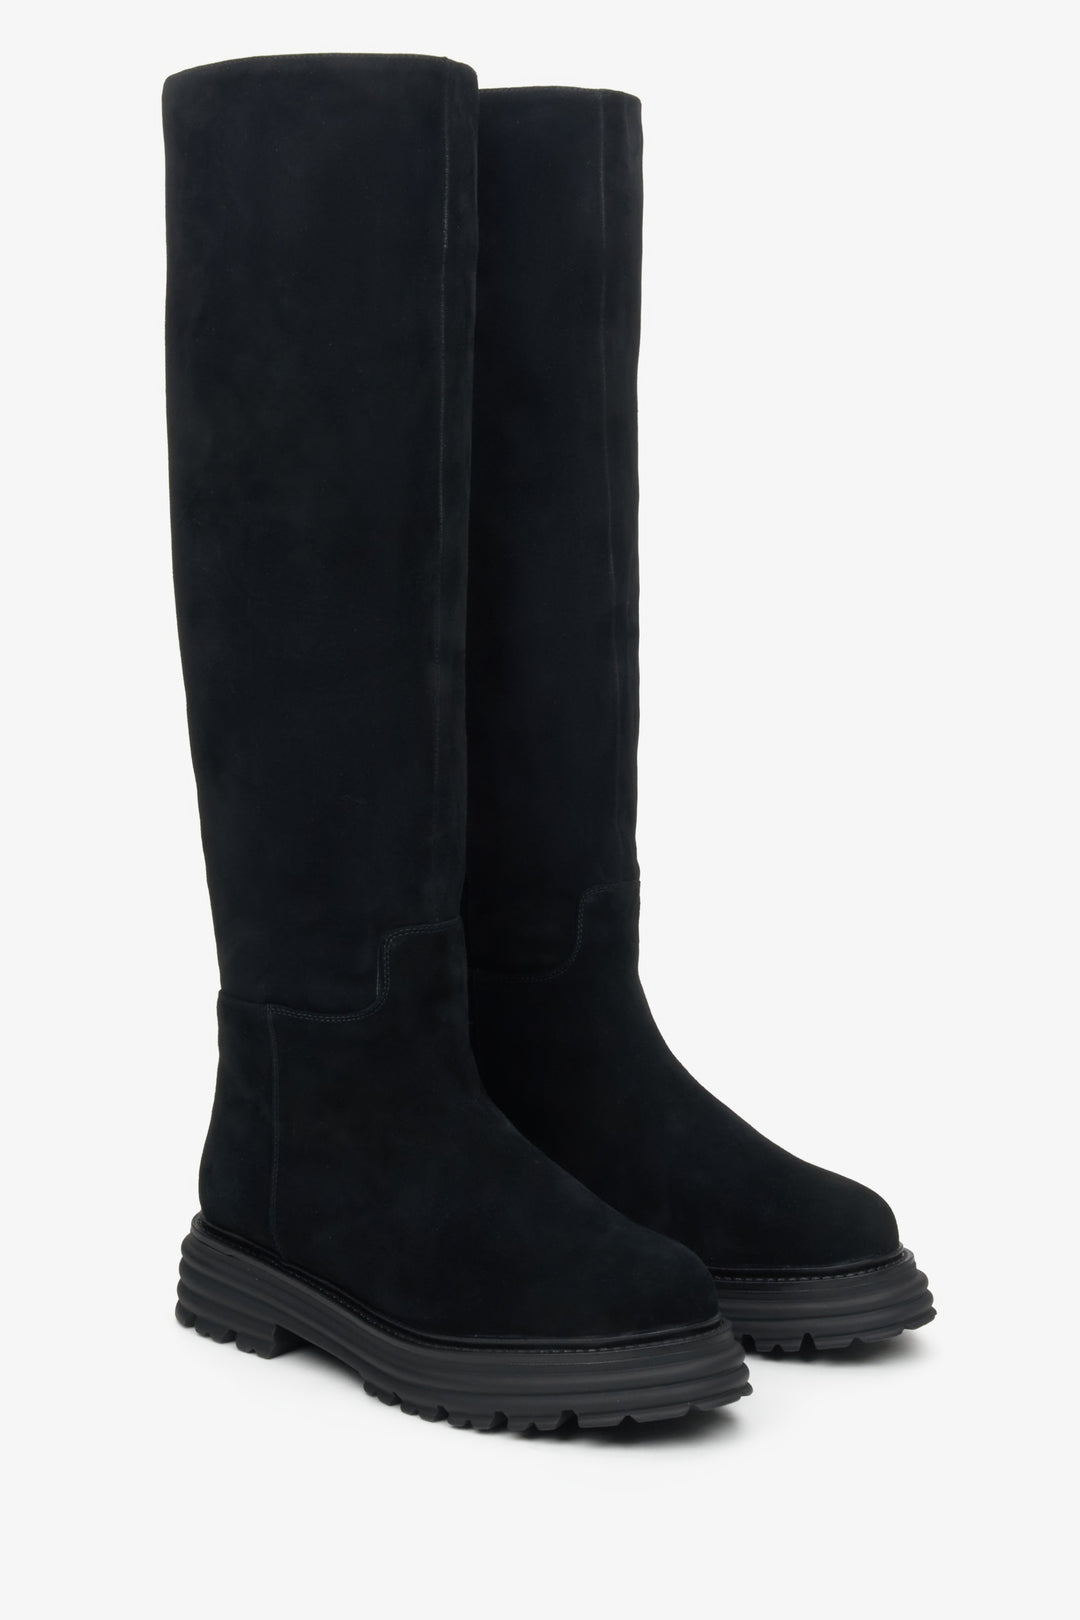 Women's knee-high boots in black velour.